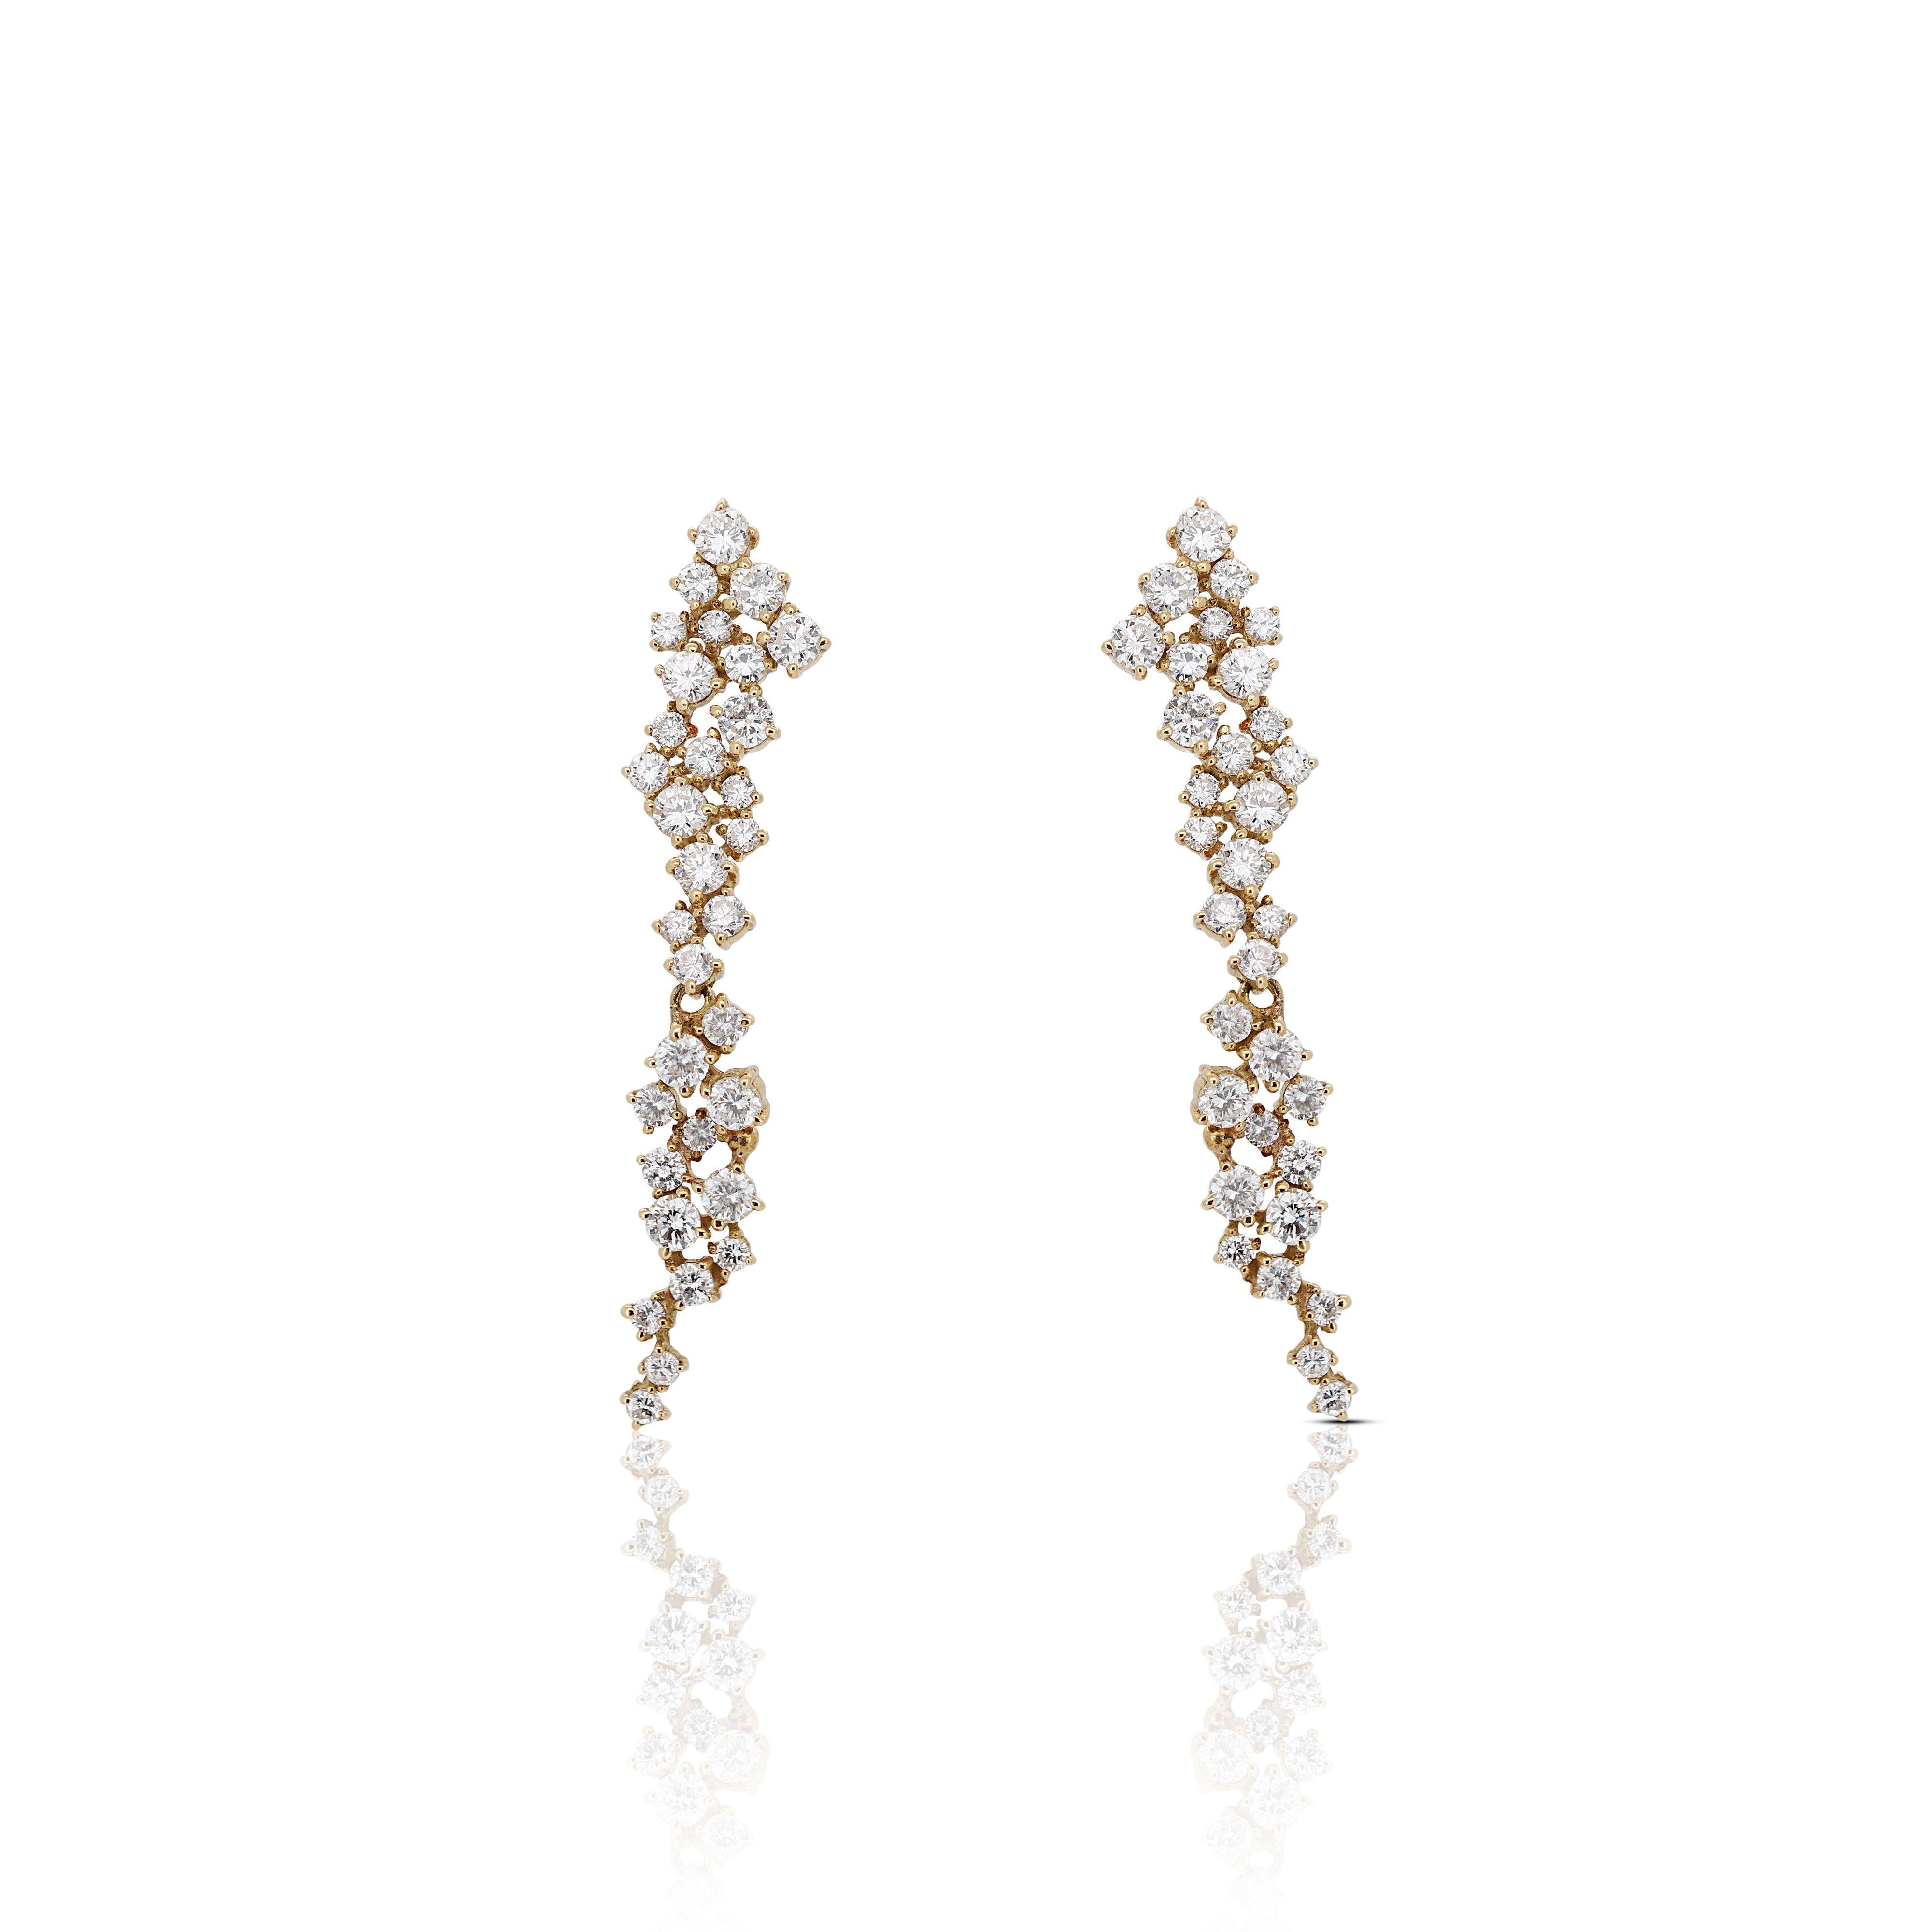 Elegant 18k Yellow Gold Drop Earrings with 1.60 Natural Round Diamonds, NGI Cert